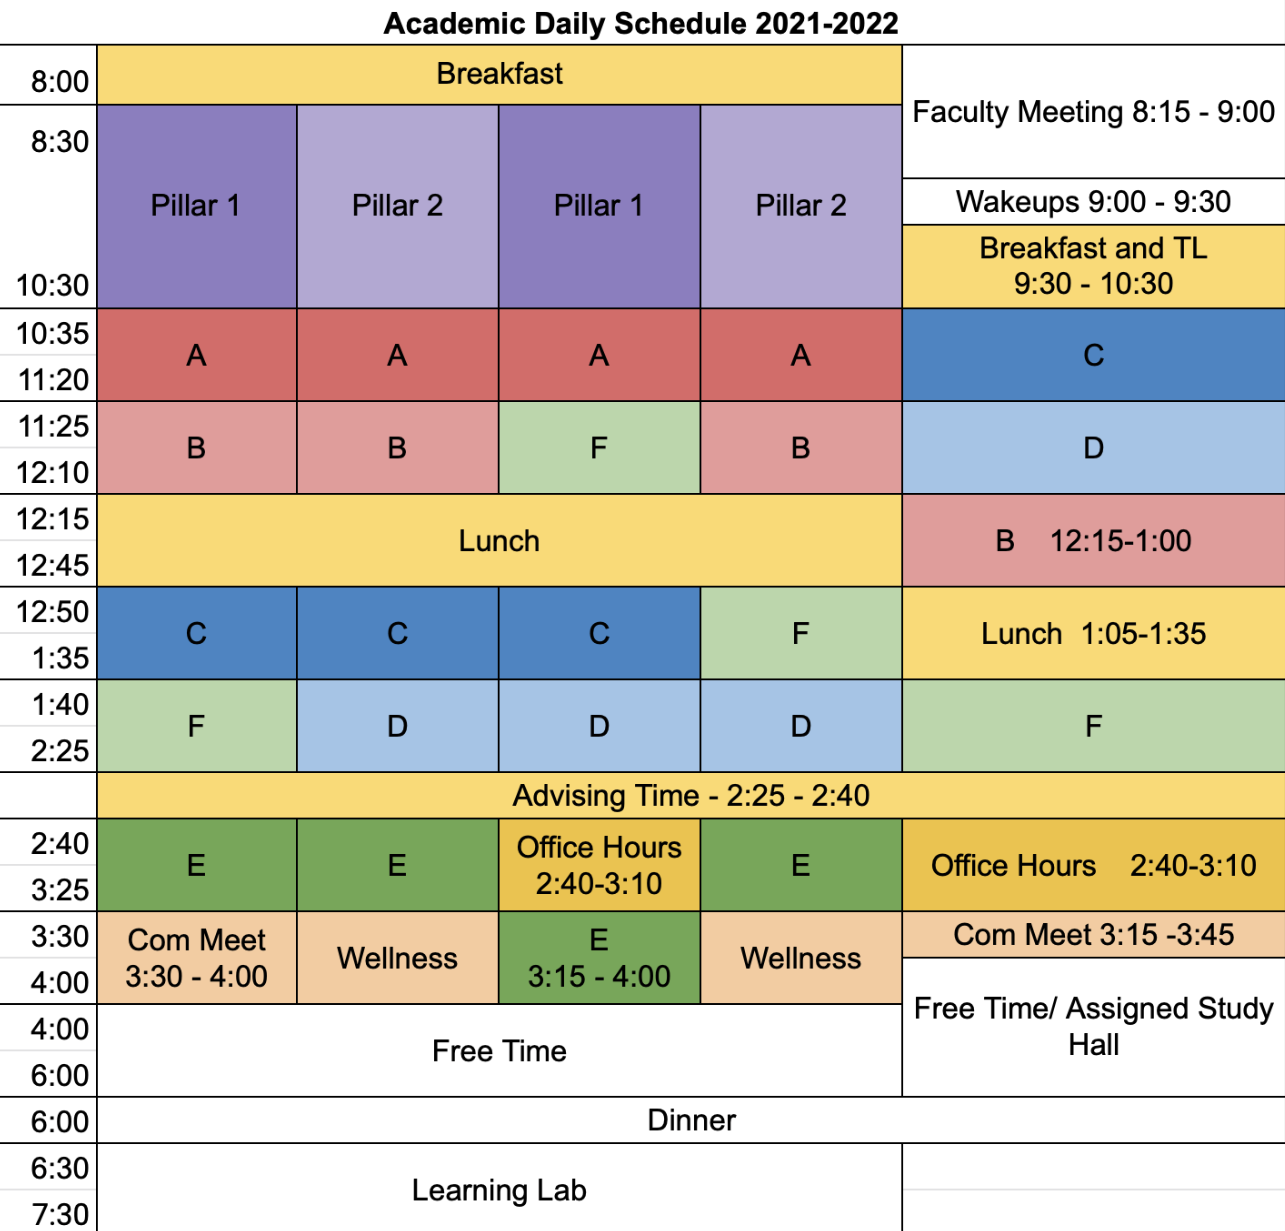 Sample Schedule 2021-2022